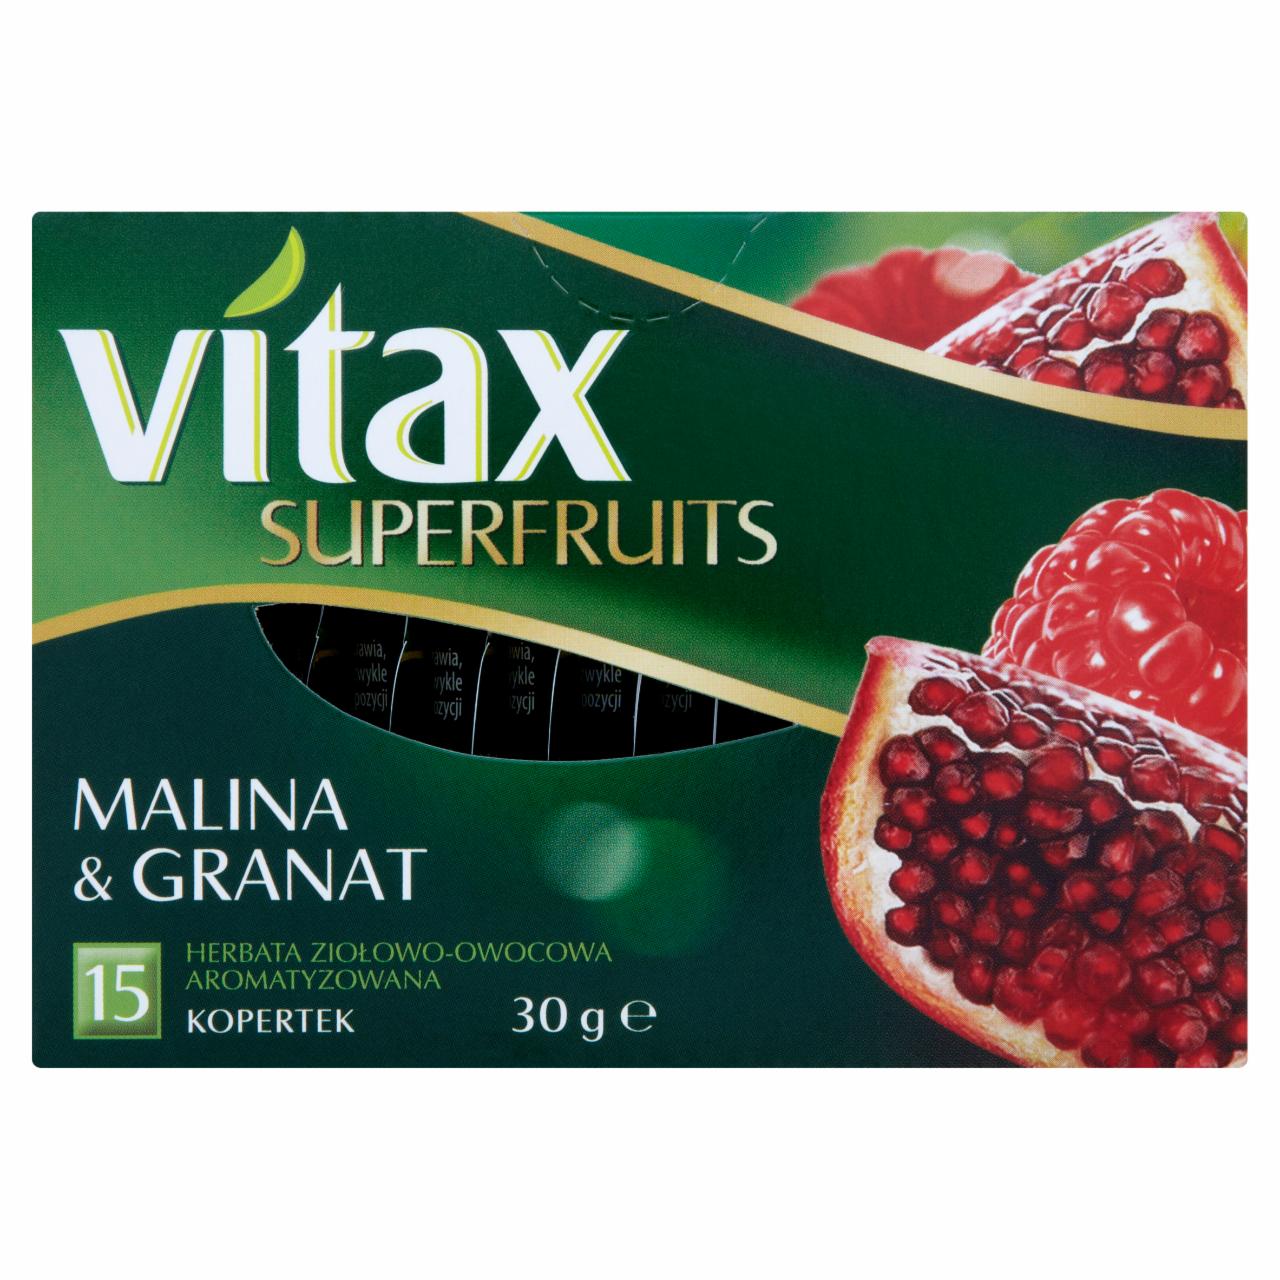 Zdjęcia - Vitax Superfruits Malina i Granat Herbata ziołowo-owocowa 30 g (15 kopertek)